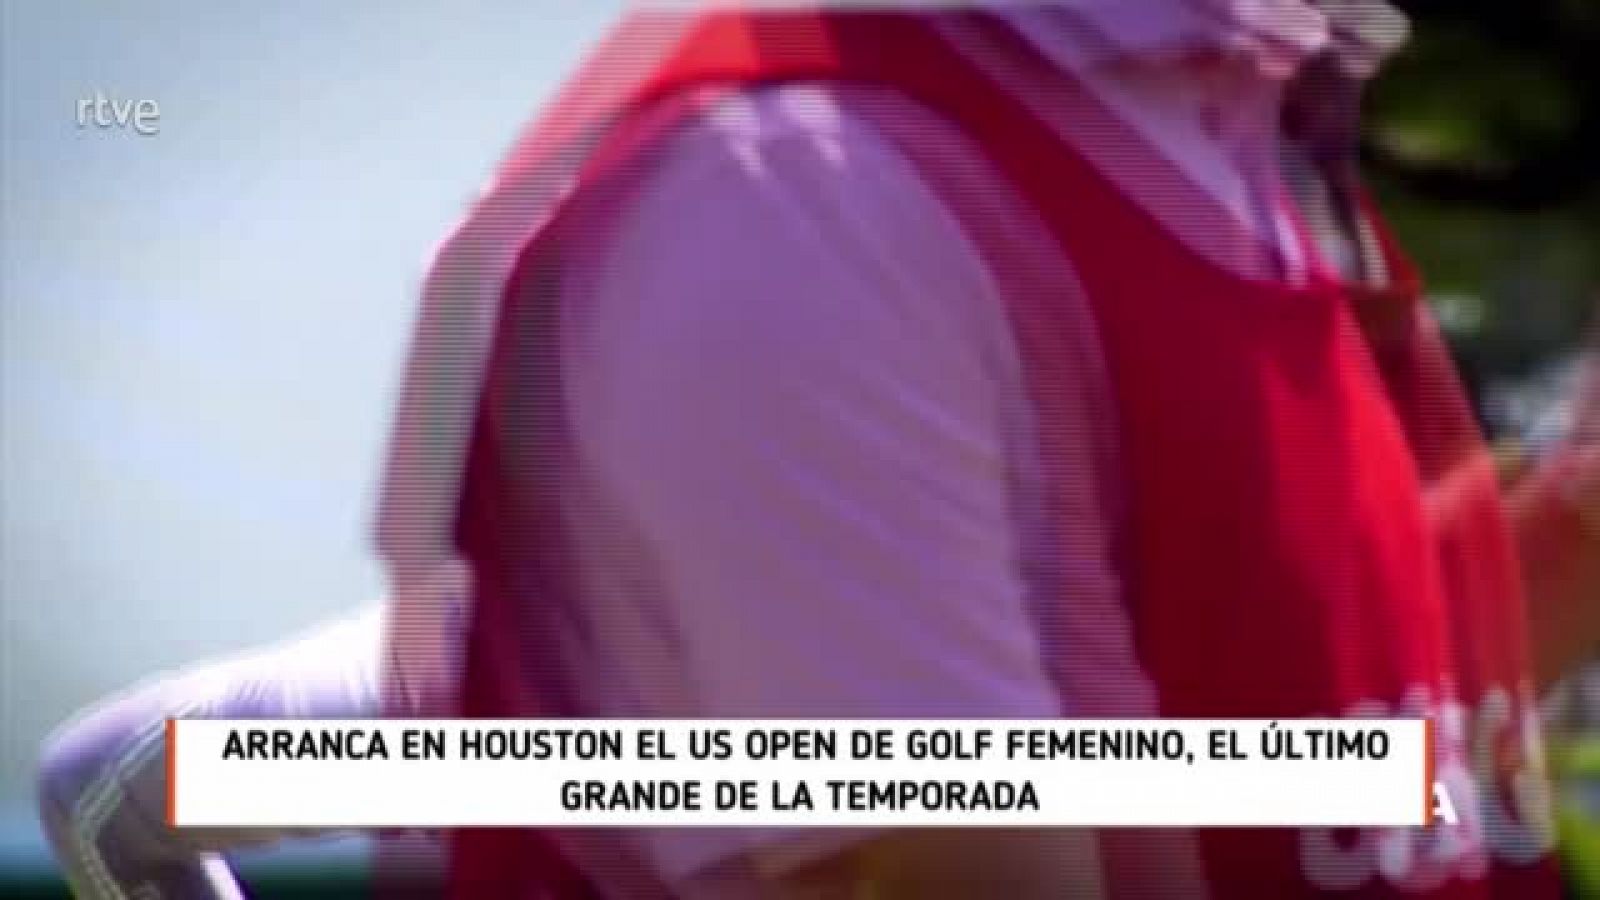 Arranca en Houston el Us Open de golf femenino